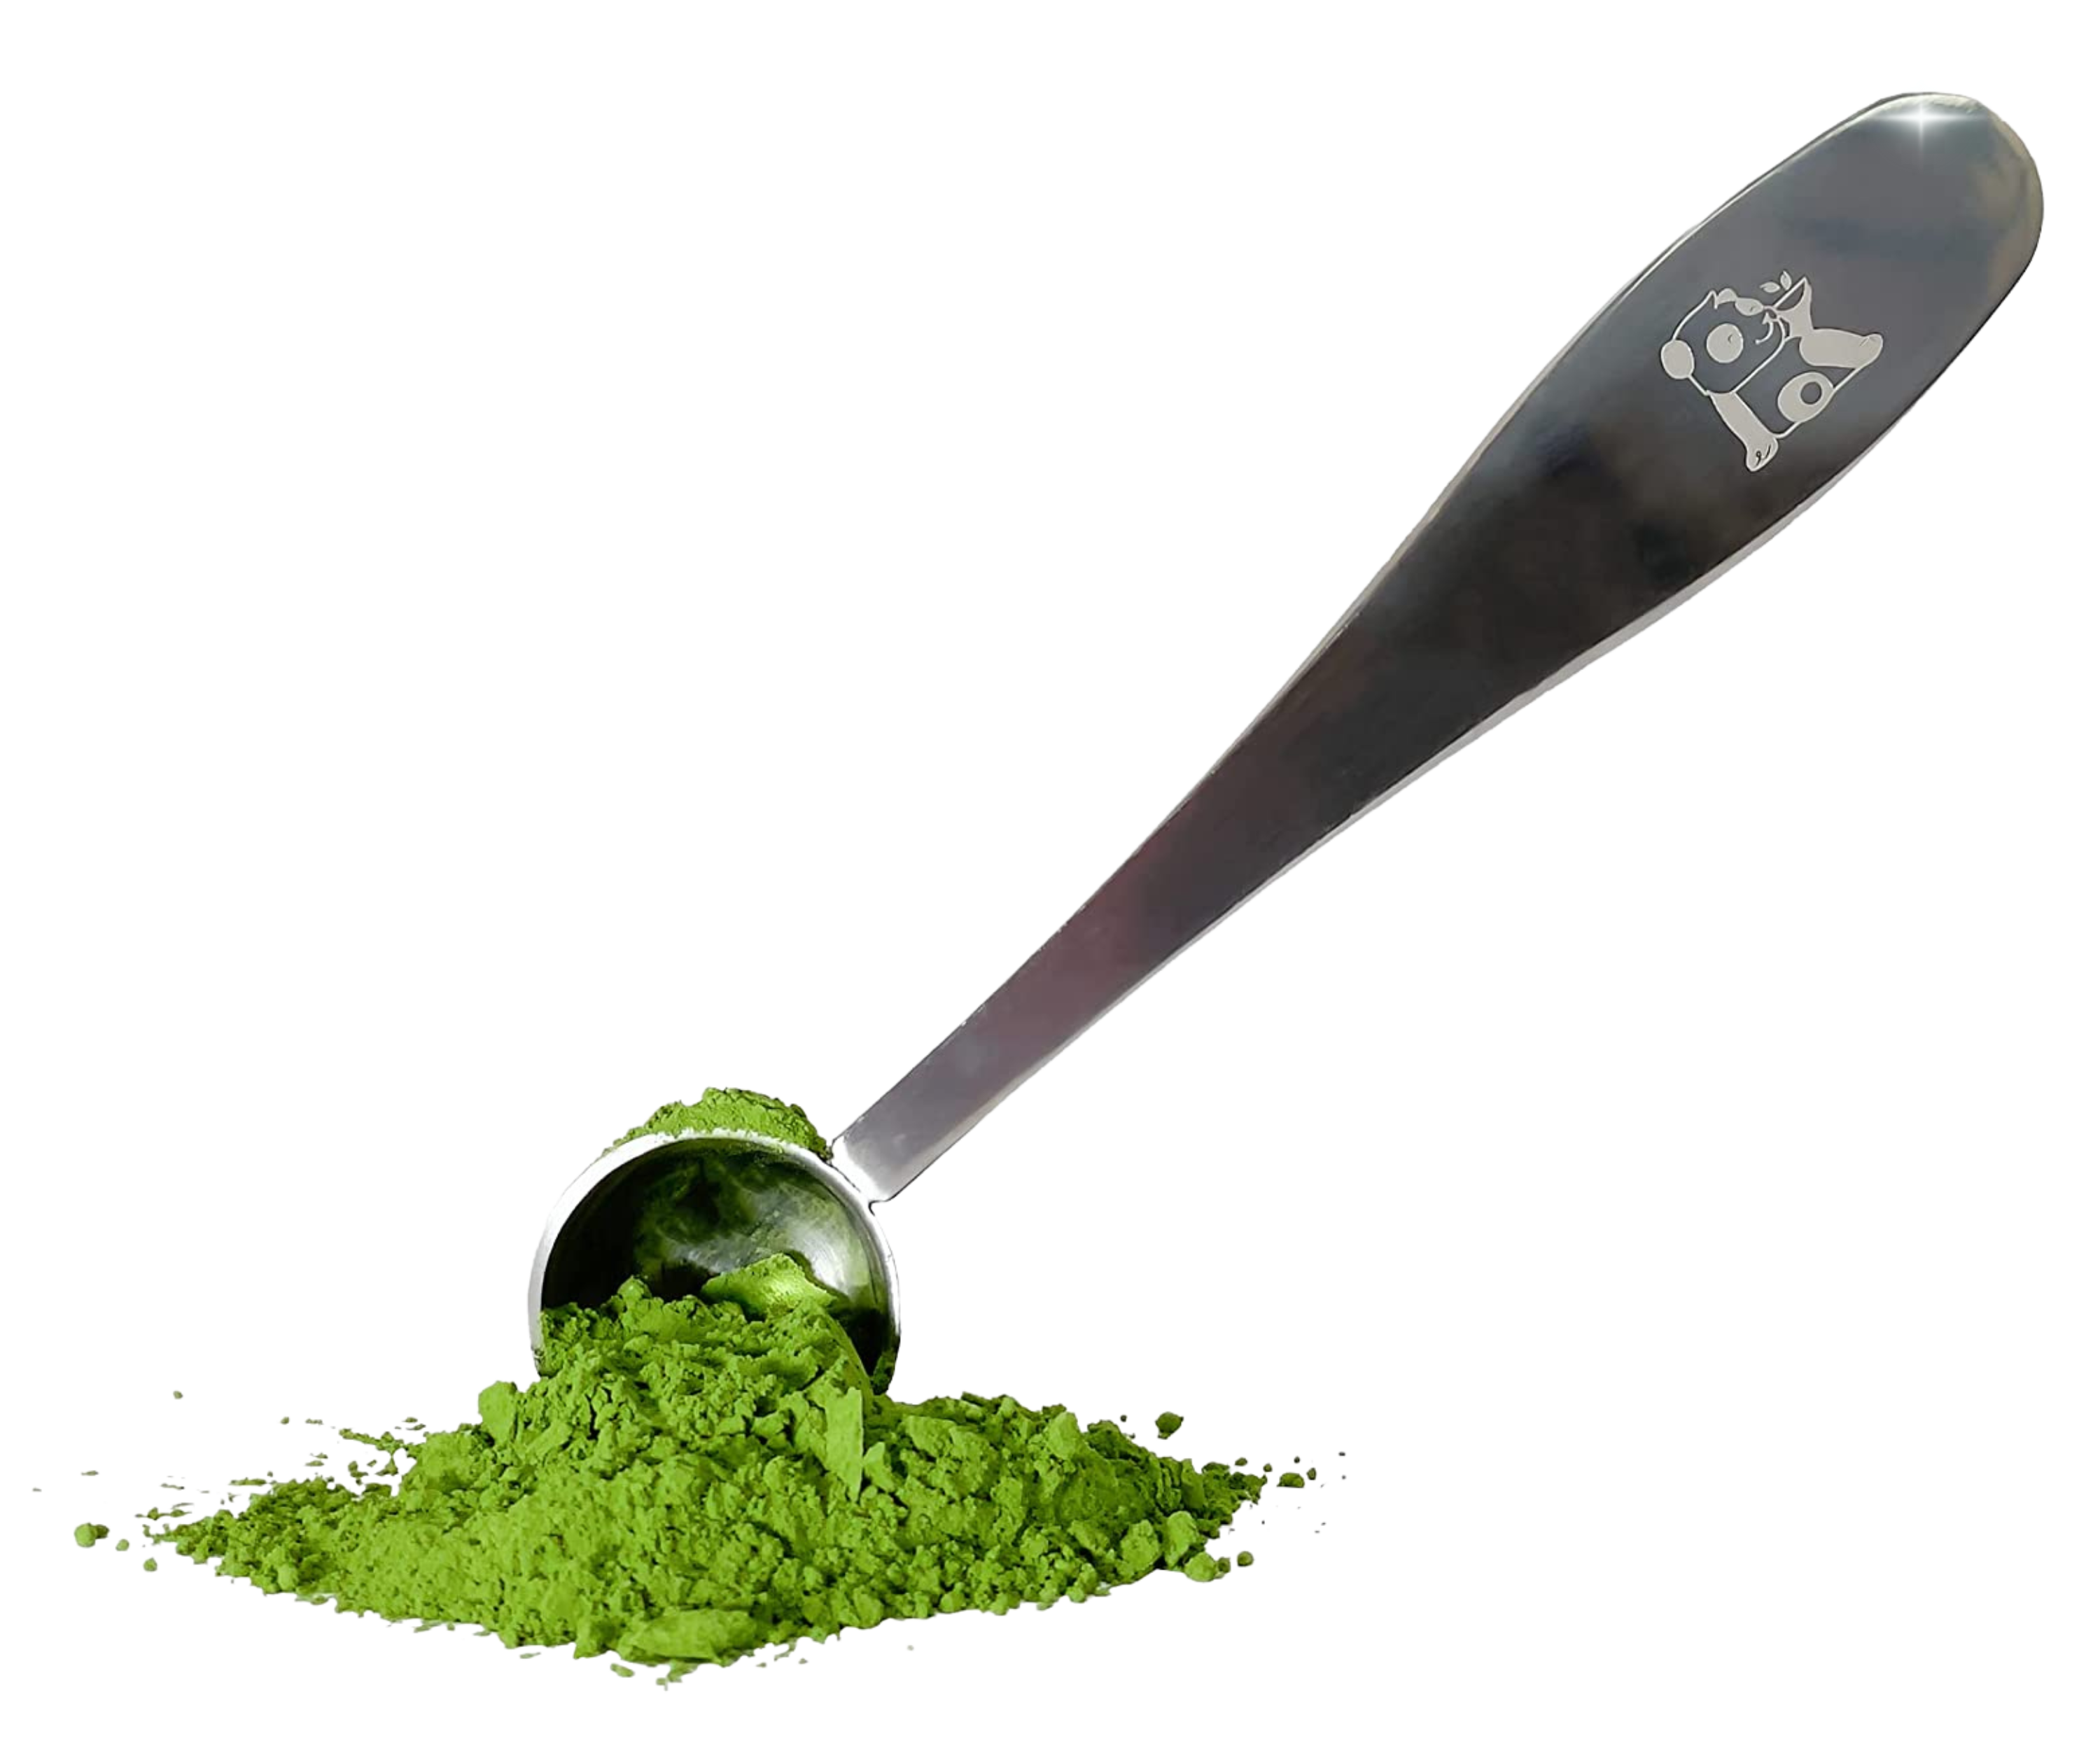 Matcha Green Tea Powder Measuring Spoon Scoop Stainless Steel Metal 1g gram perfect cup